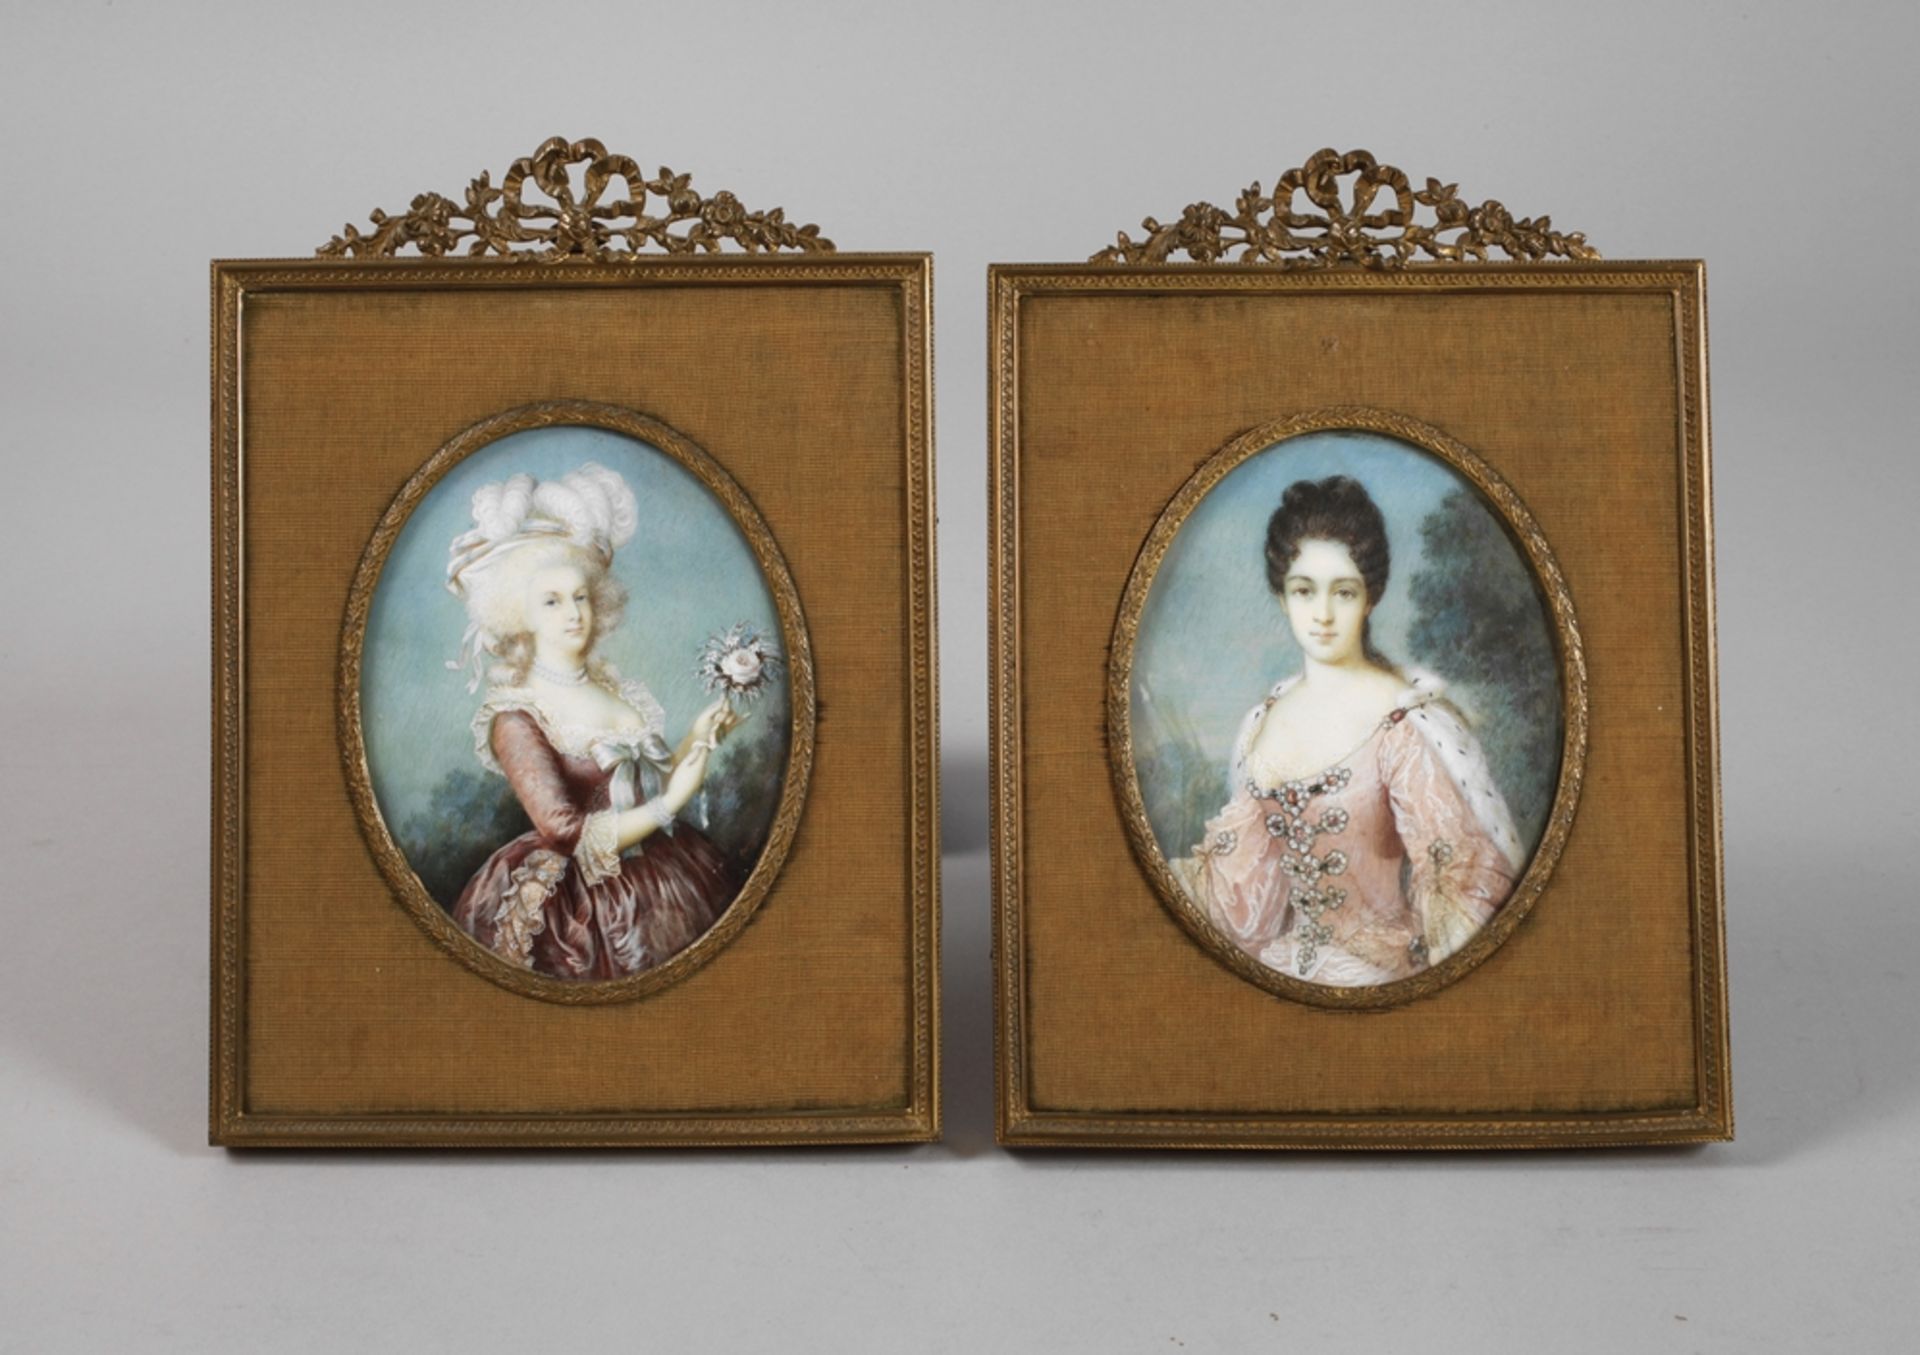 Two miniature portraits